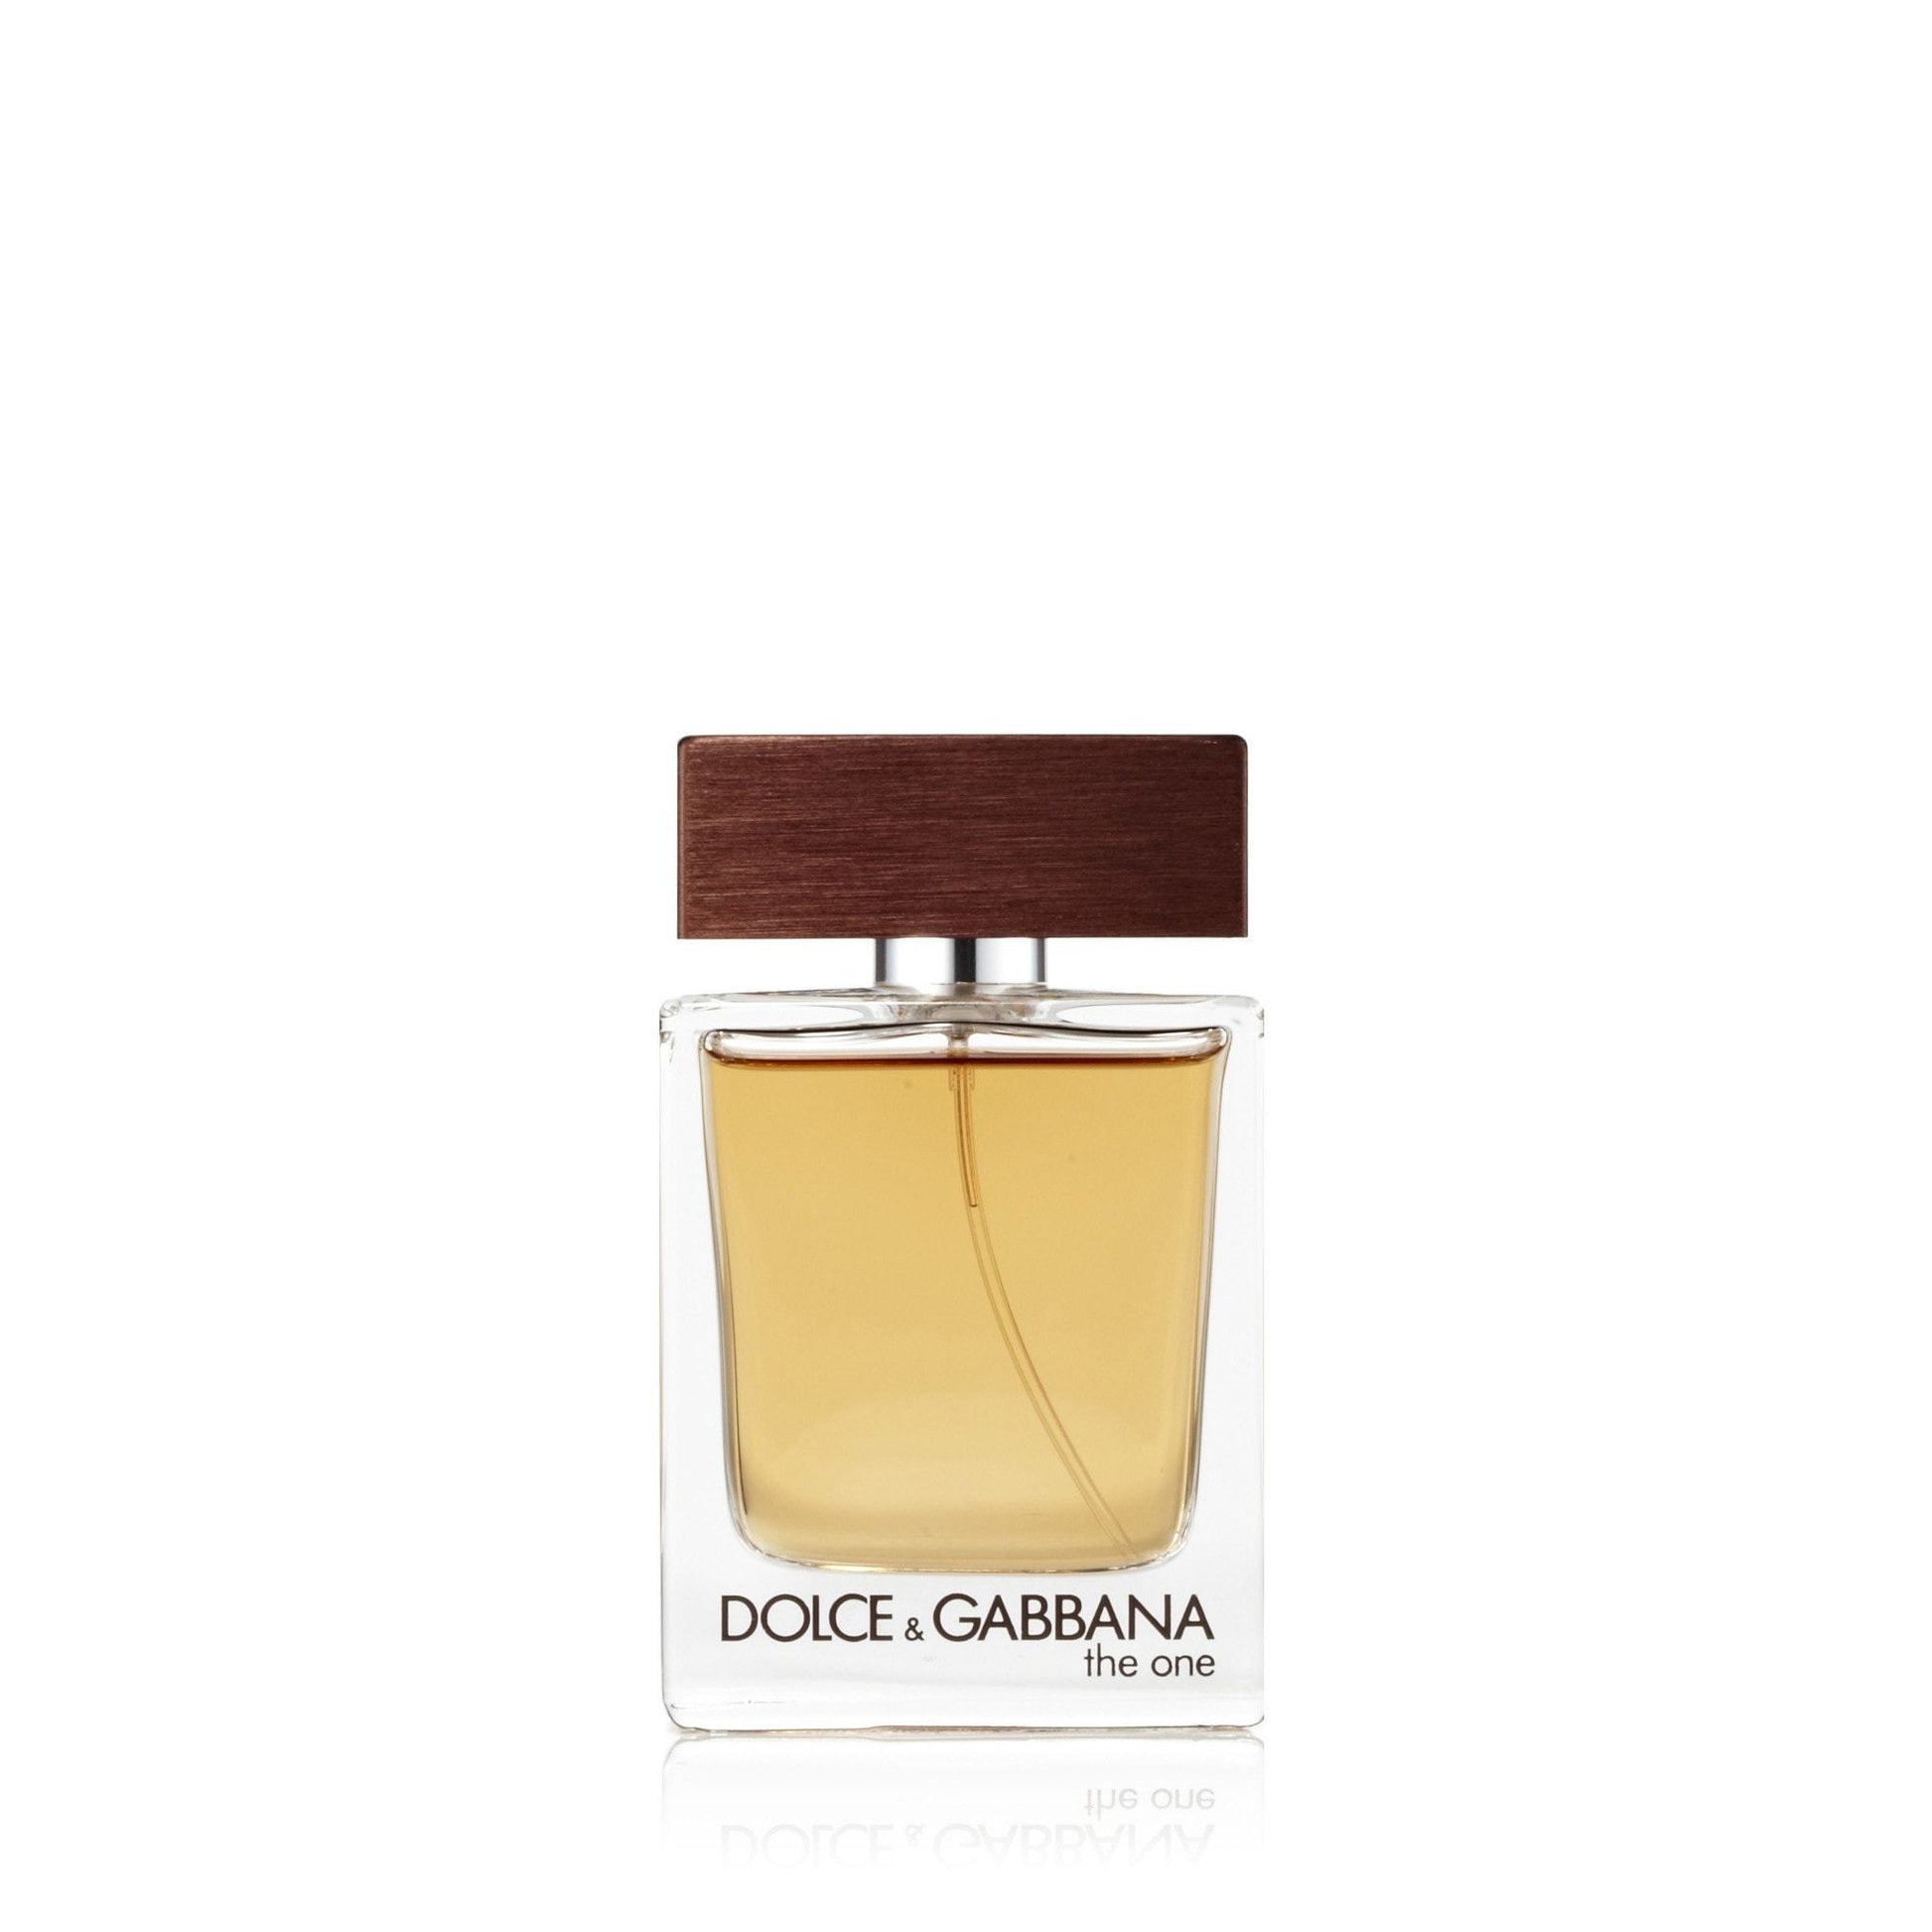 The One Eau de Toilette Spray for Men by Dolce & Gabbana, Product image 6